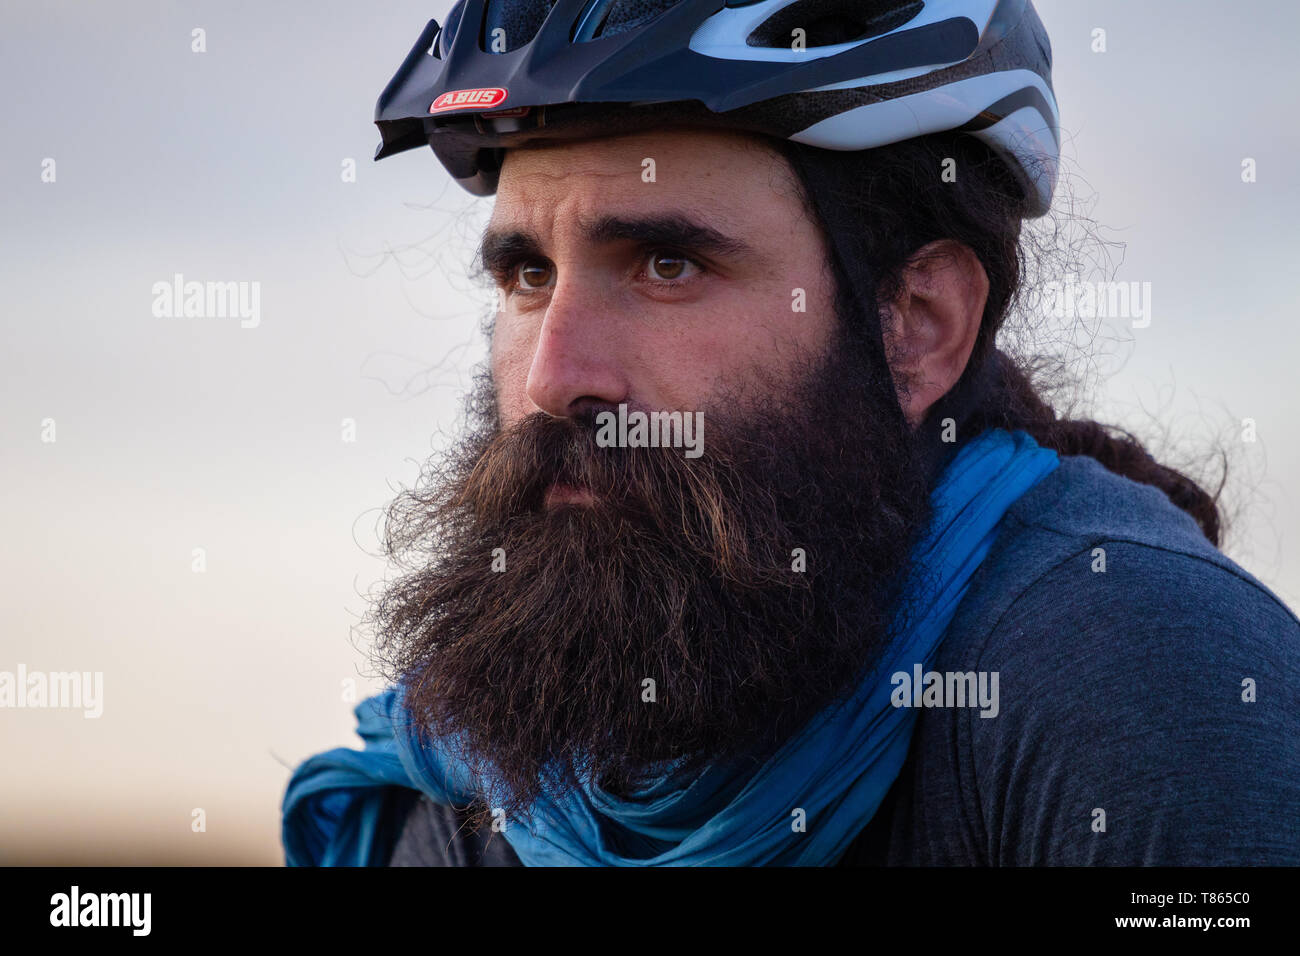 Young caucasian bearded man wearing a bike helmet Stock Photo